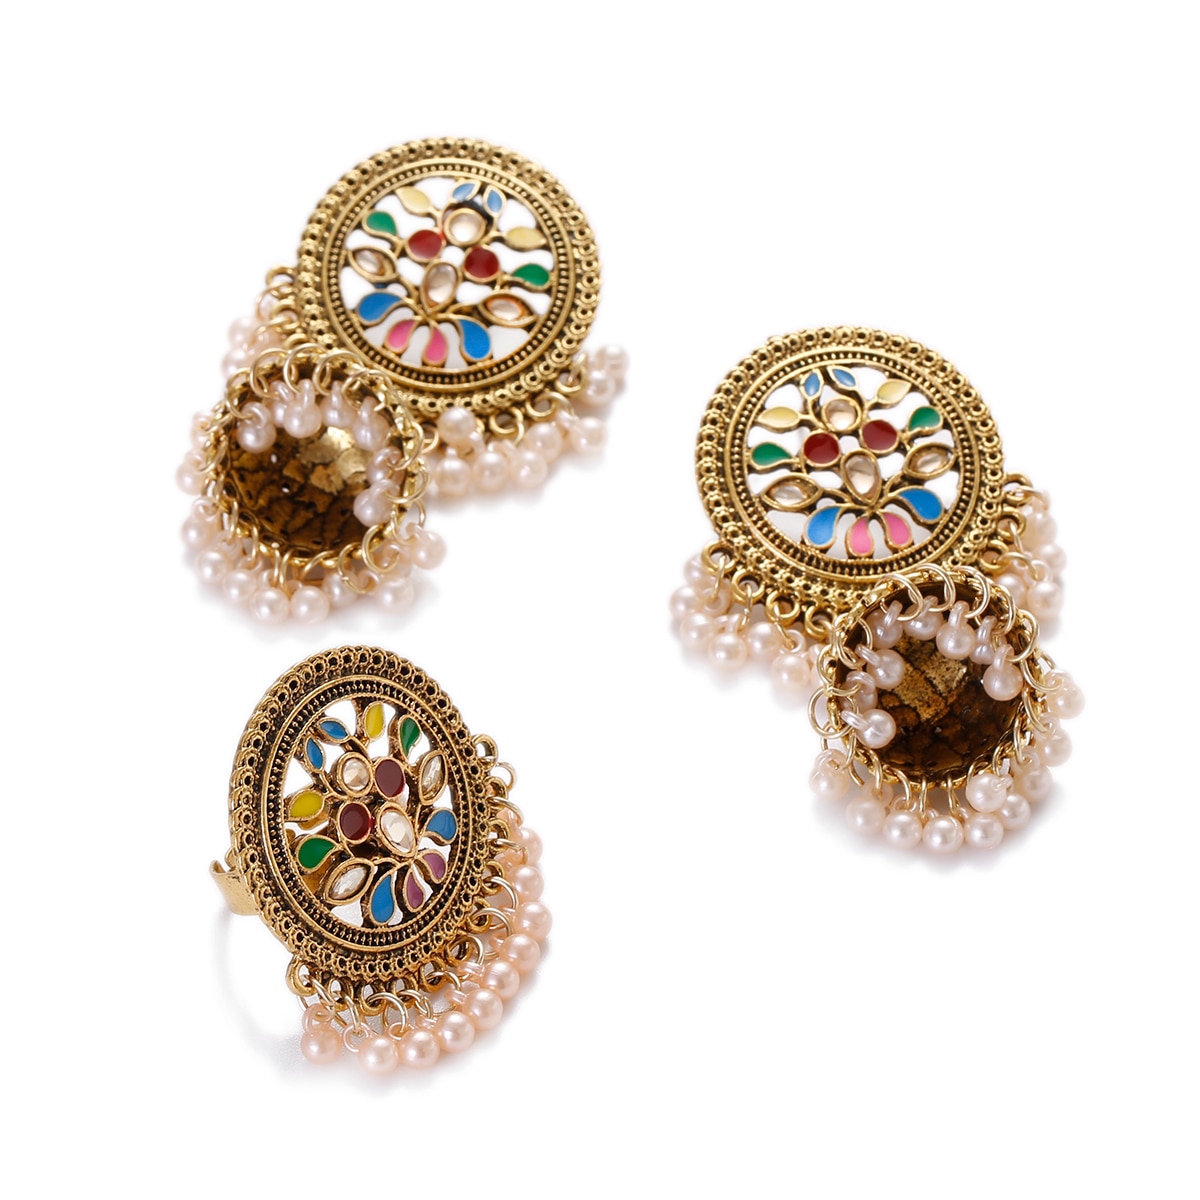 Classic-Round-Flower-India-EarringRing-Set-Women39s-Wedding-Jewelry-Hangers-Pearl-Beads-Jhumka-Earri-3256804205740657-5